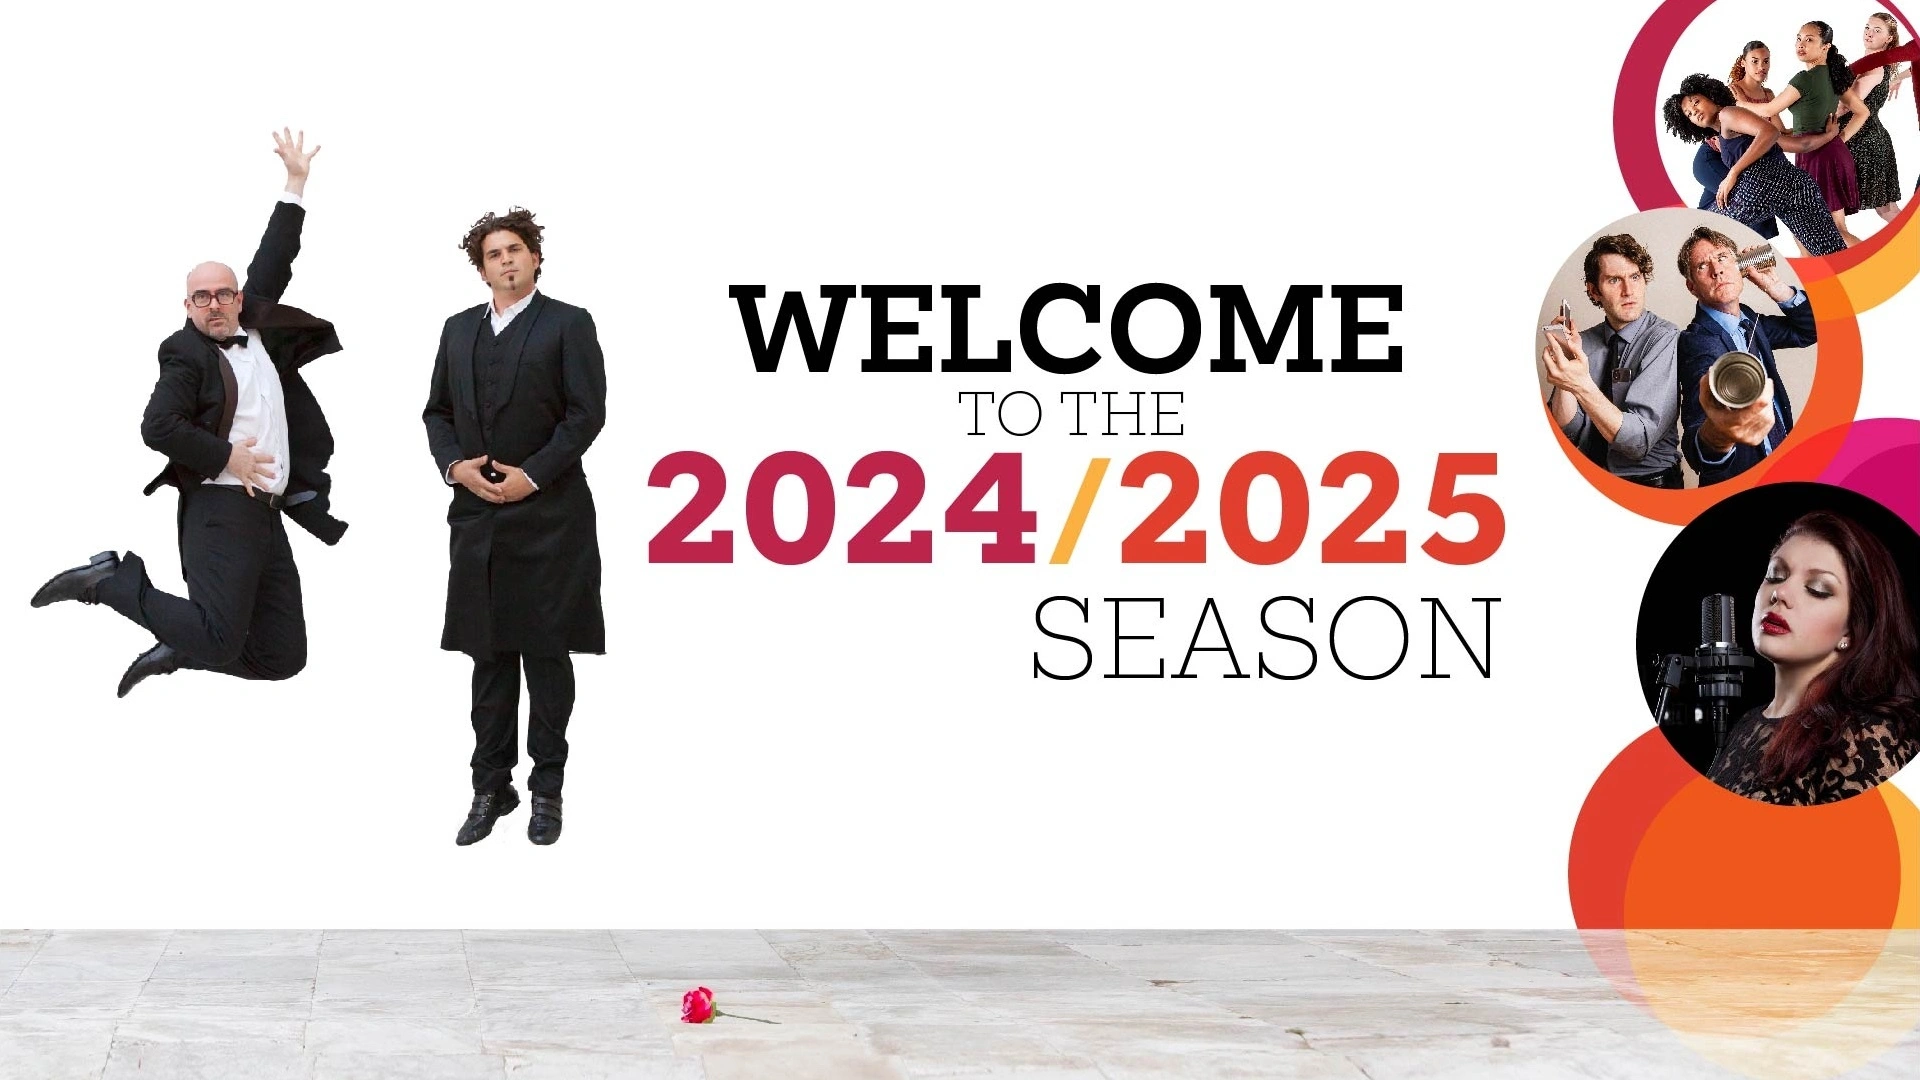 Welcome to the 2024/2025 Season